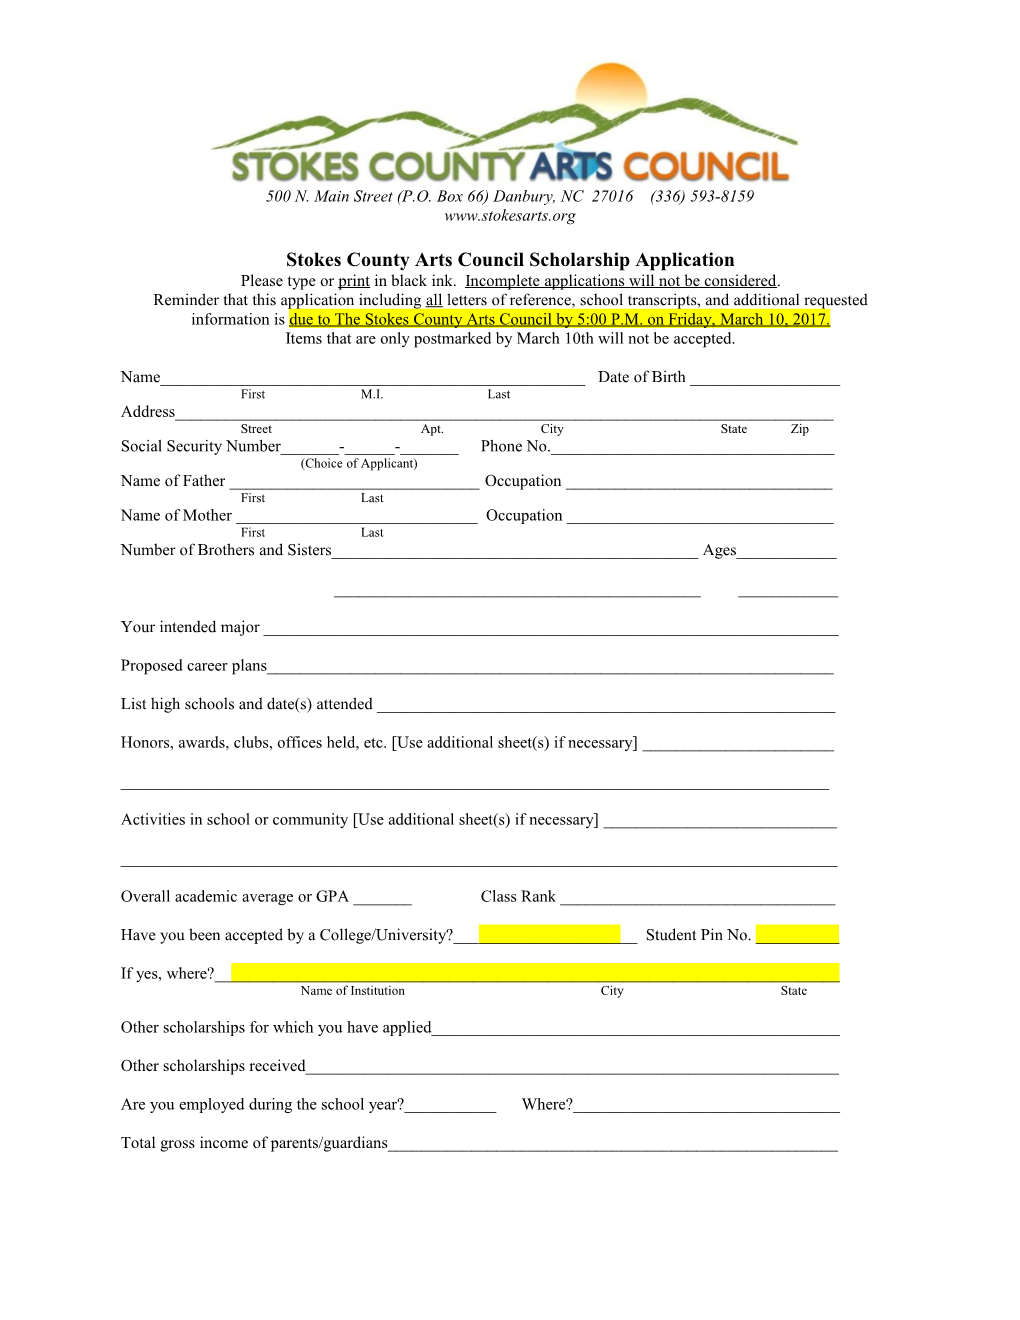 Stokes County Arts Council Scholarship Application